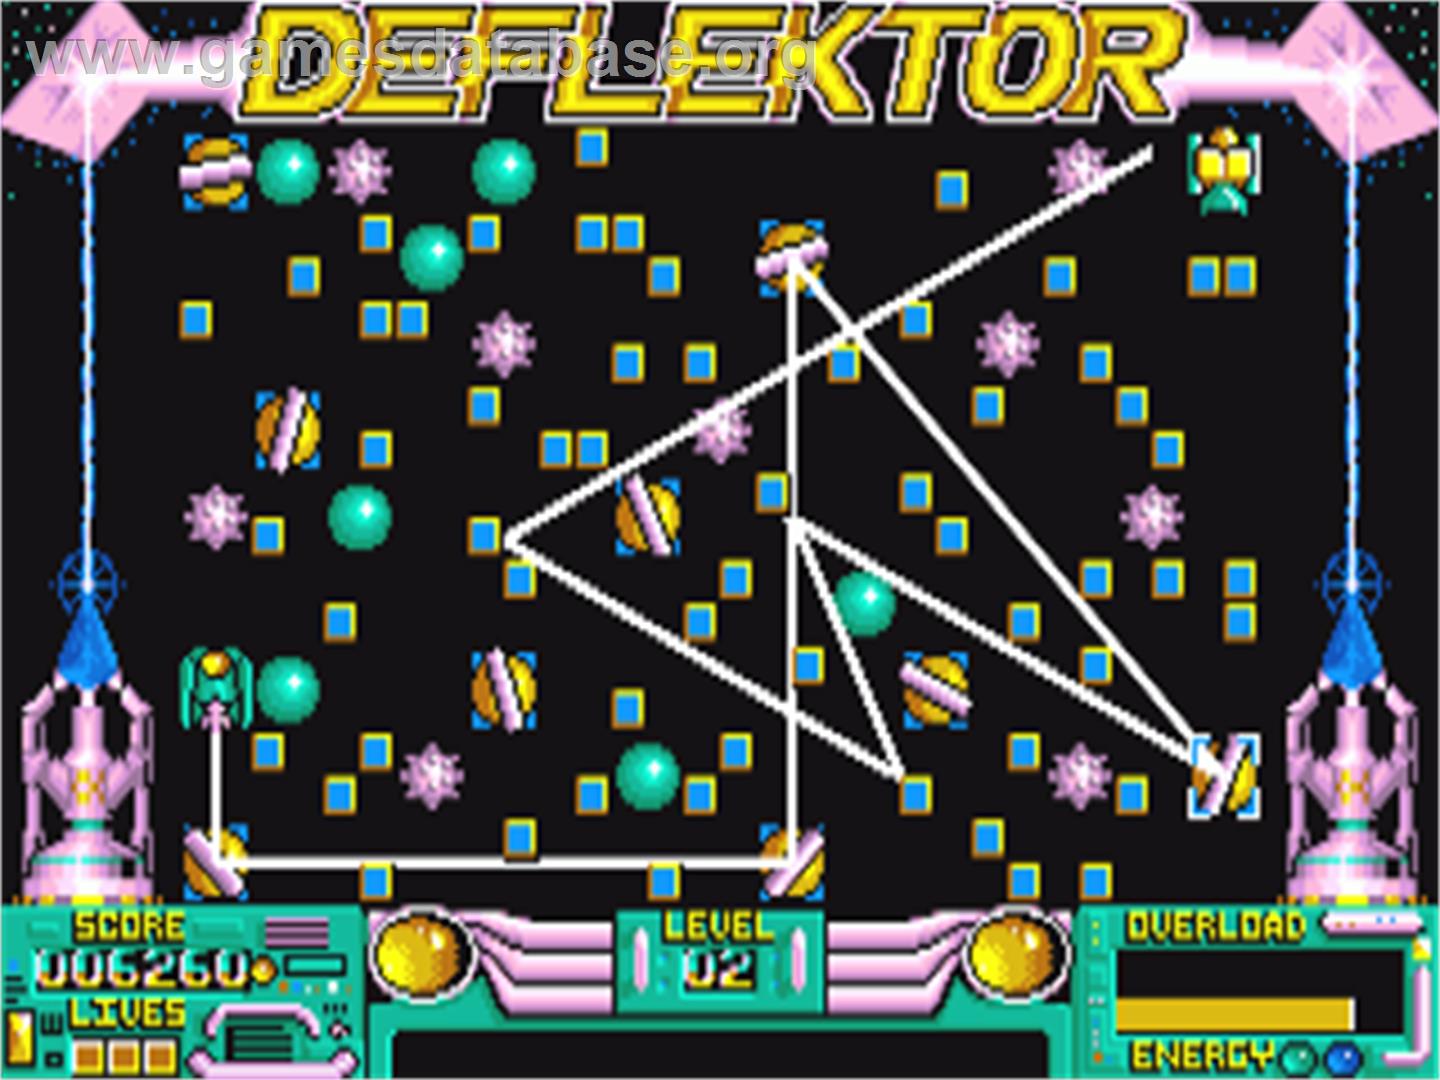 Deflektor - Commodore Amiga - Artwork - In Game